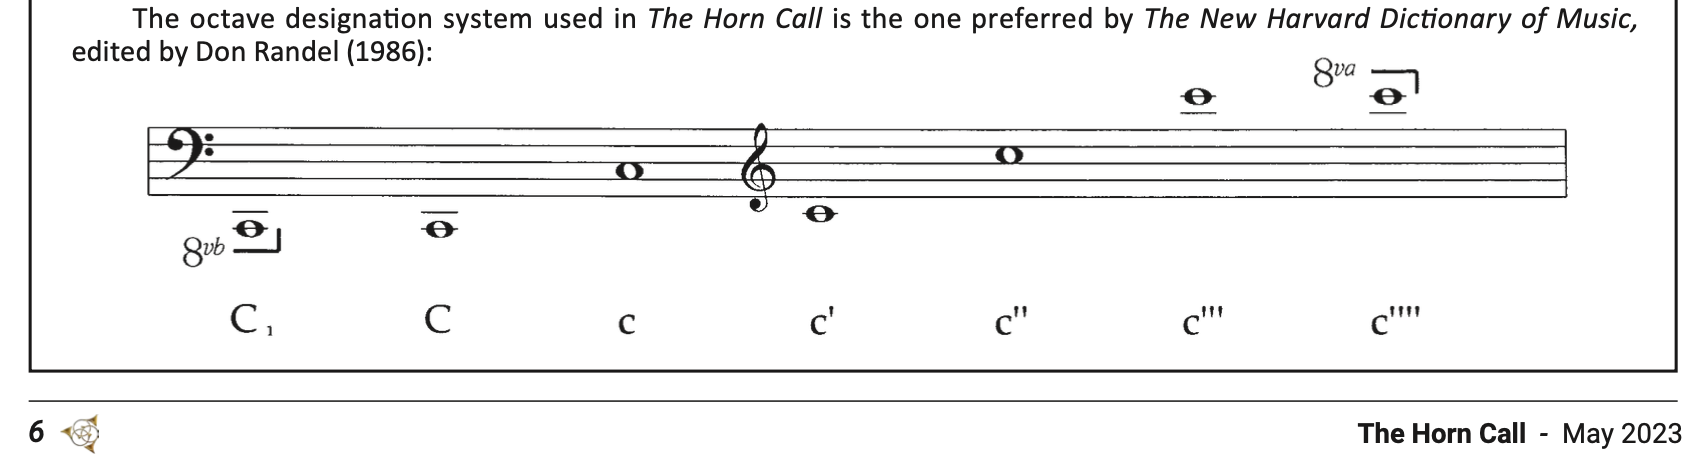 Horn Call octave designation system